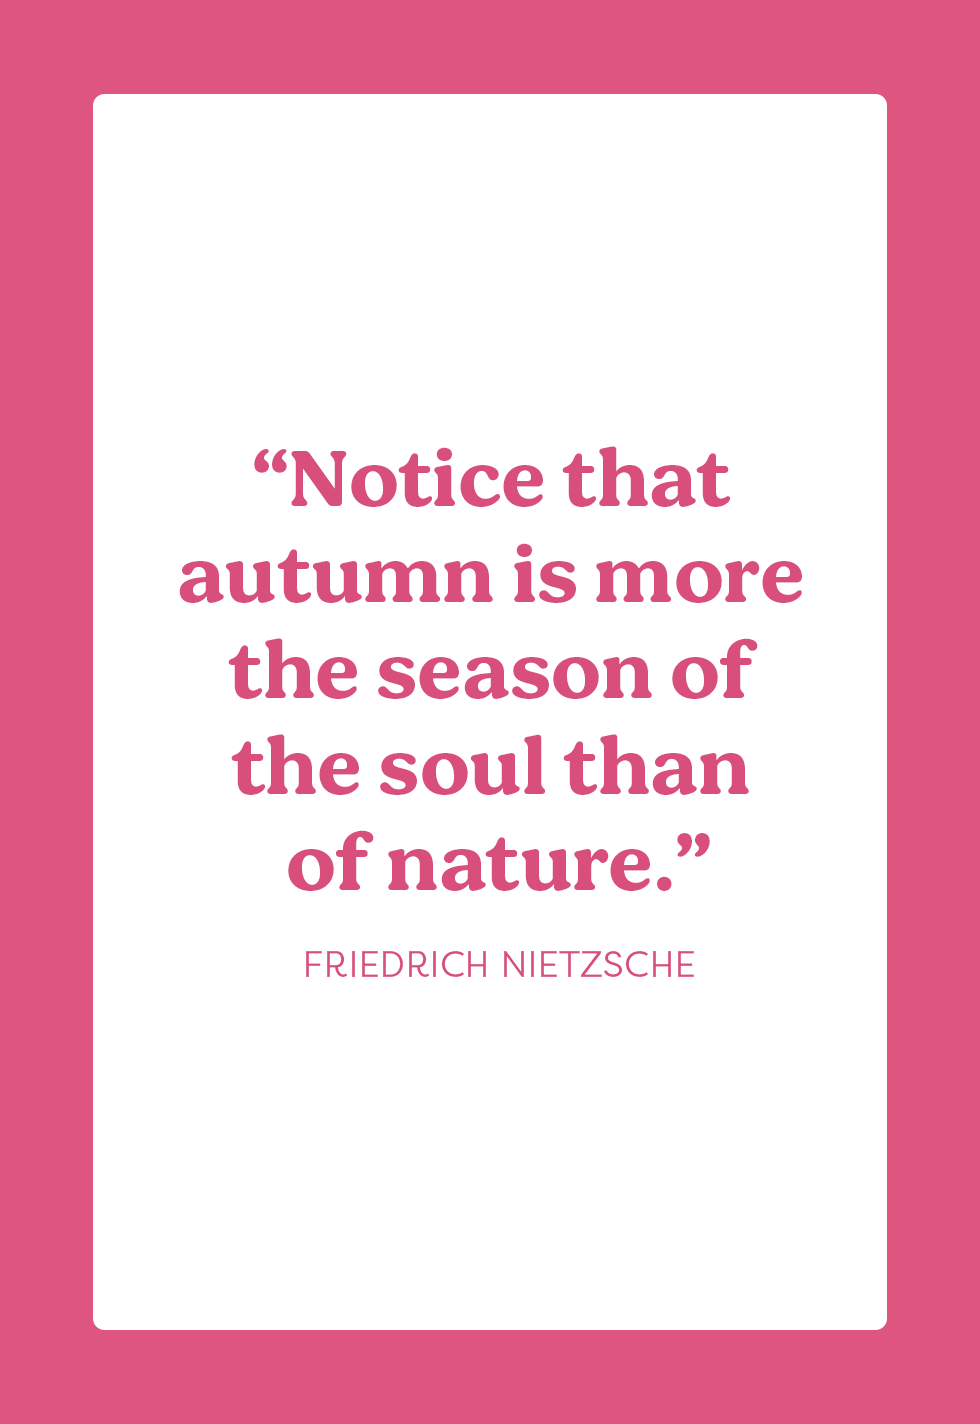 fall season quotes